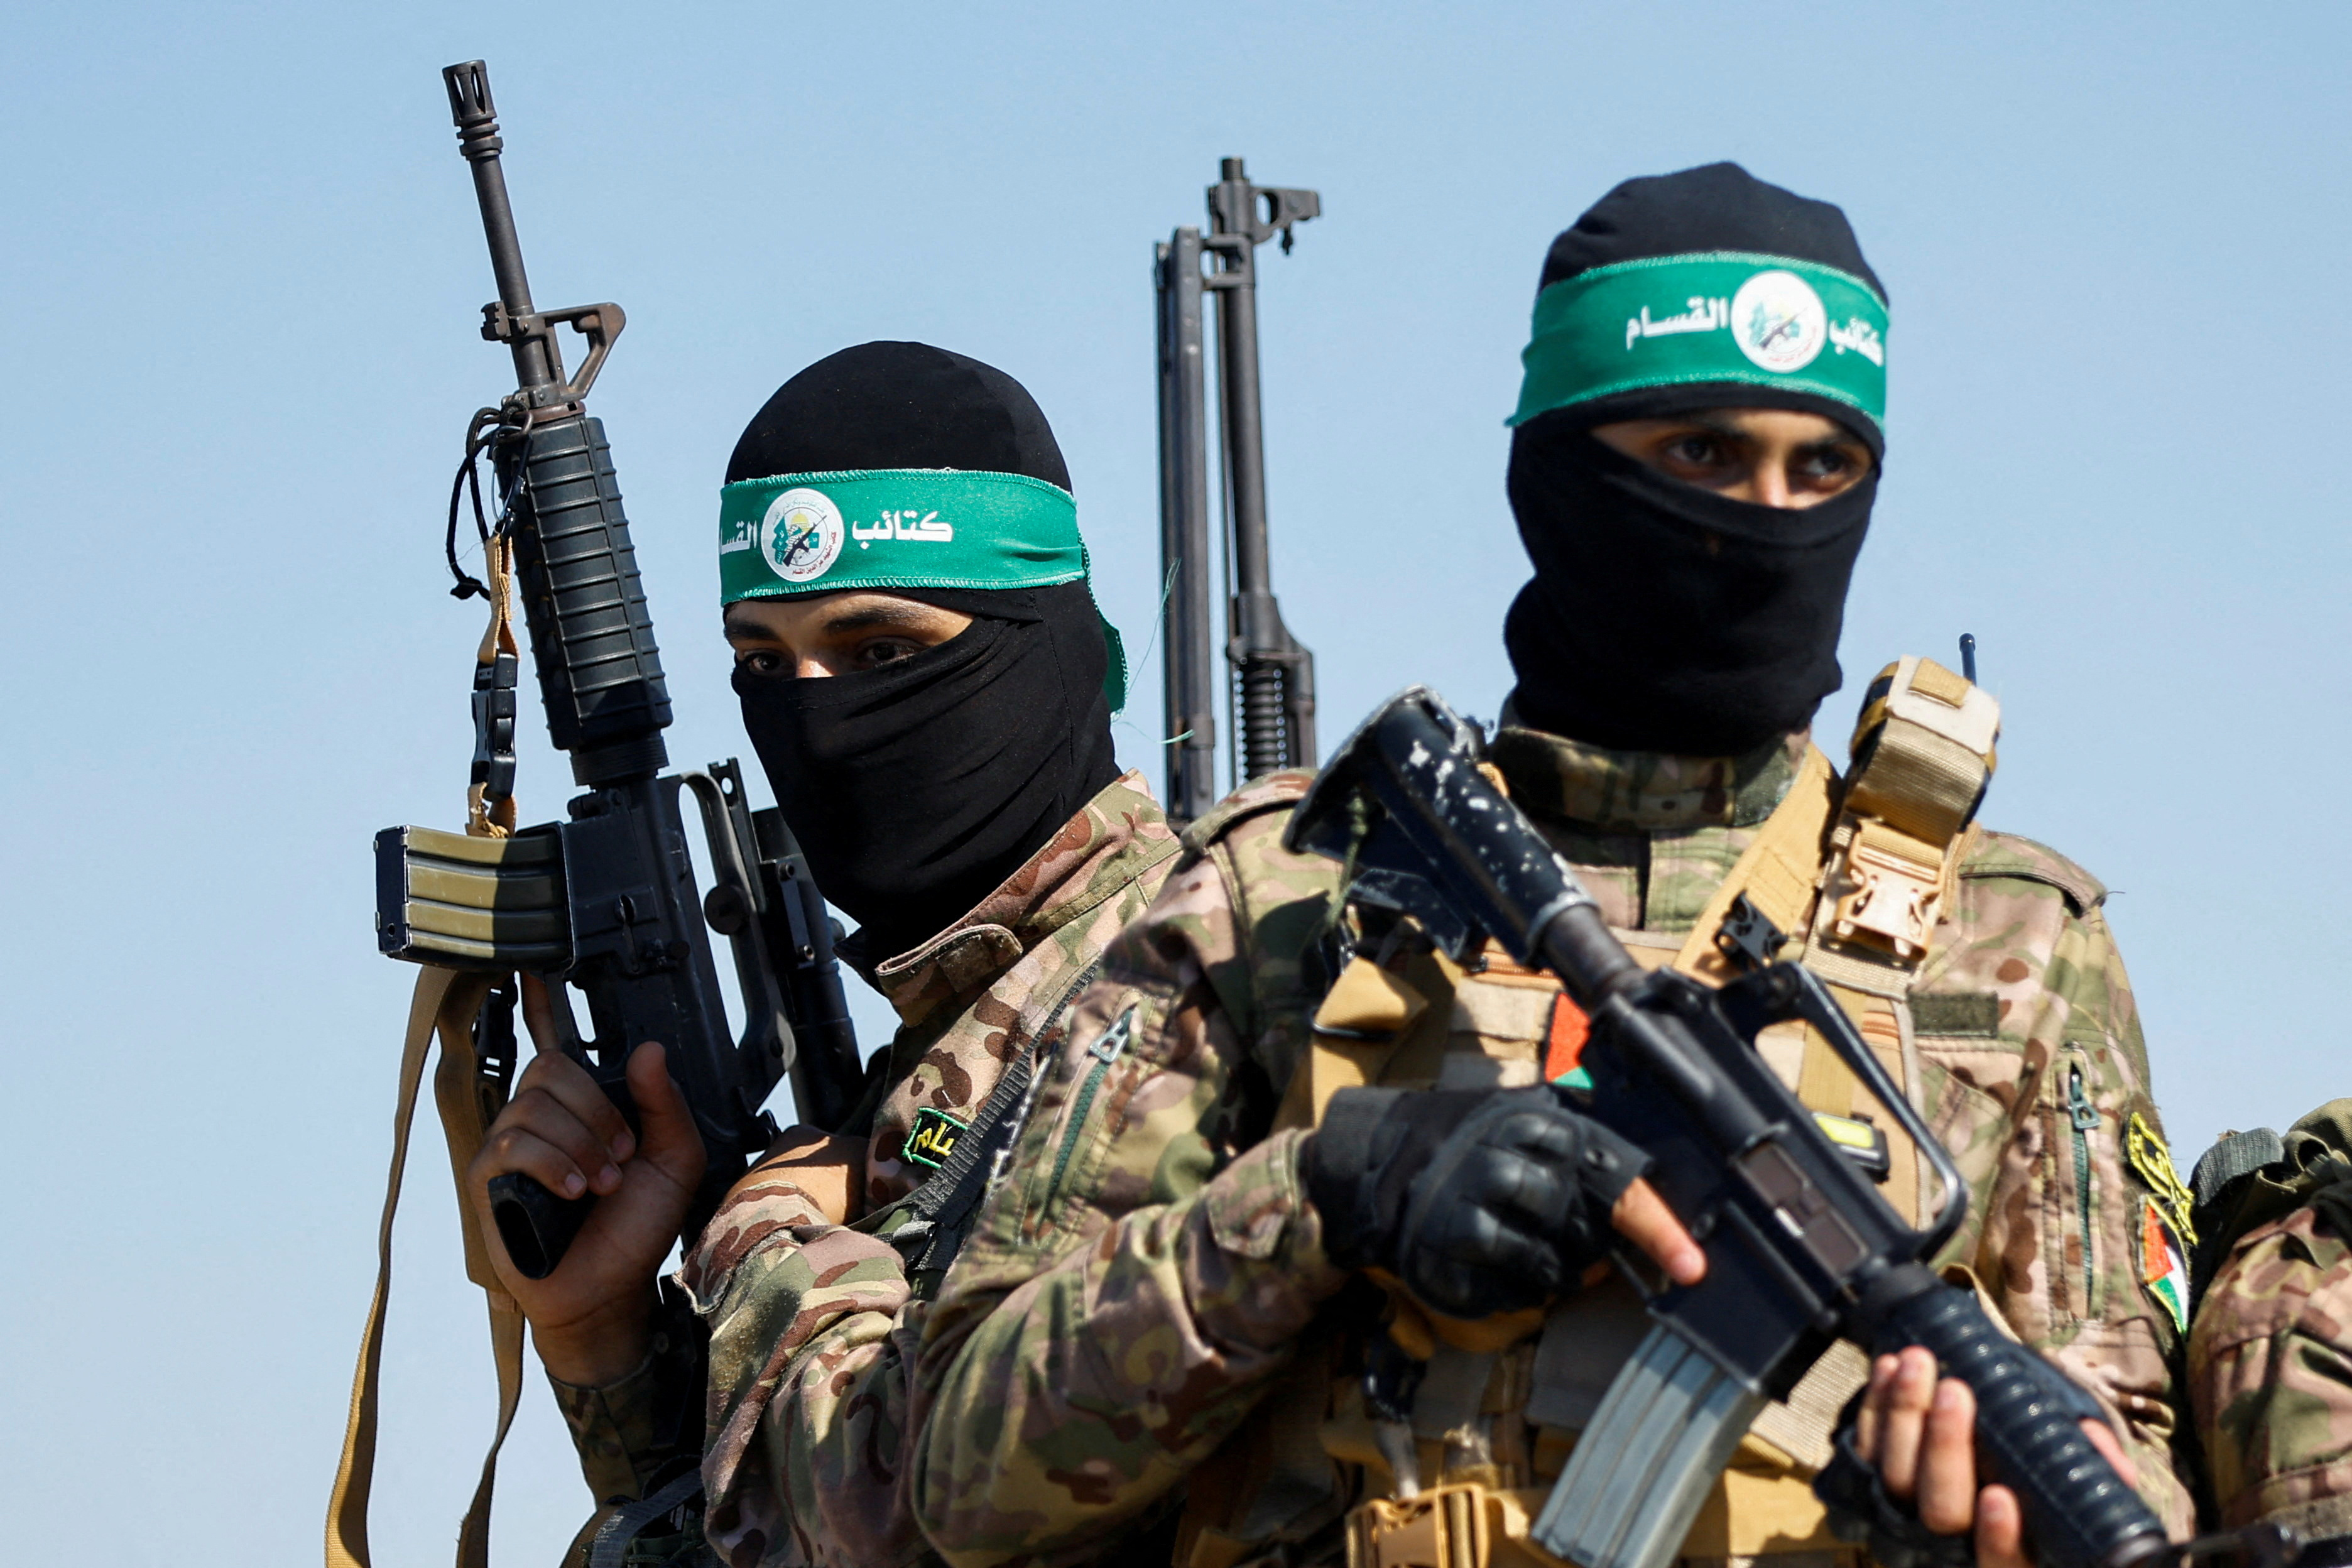 Switzerland to ban Hamas after Israel attacks | Reuters